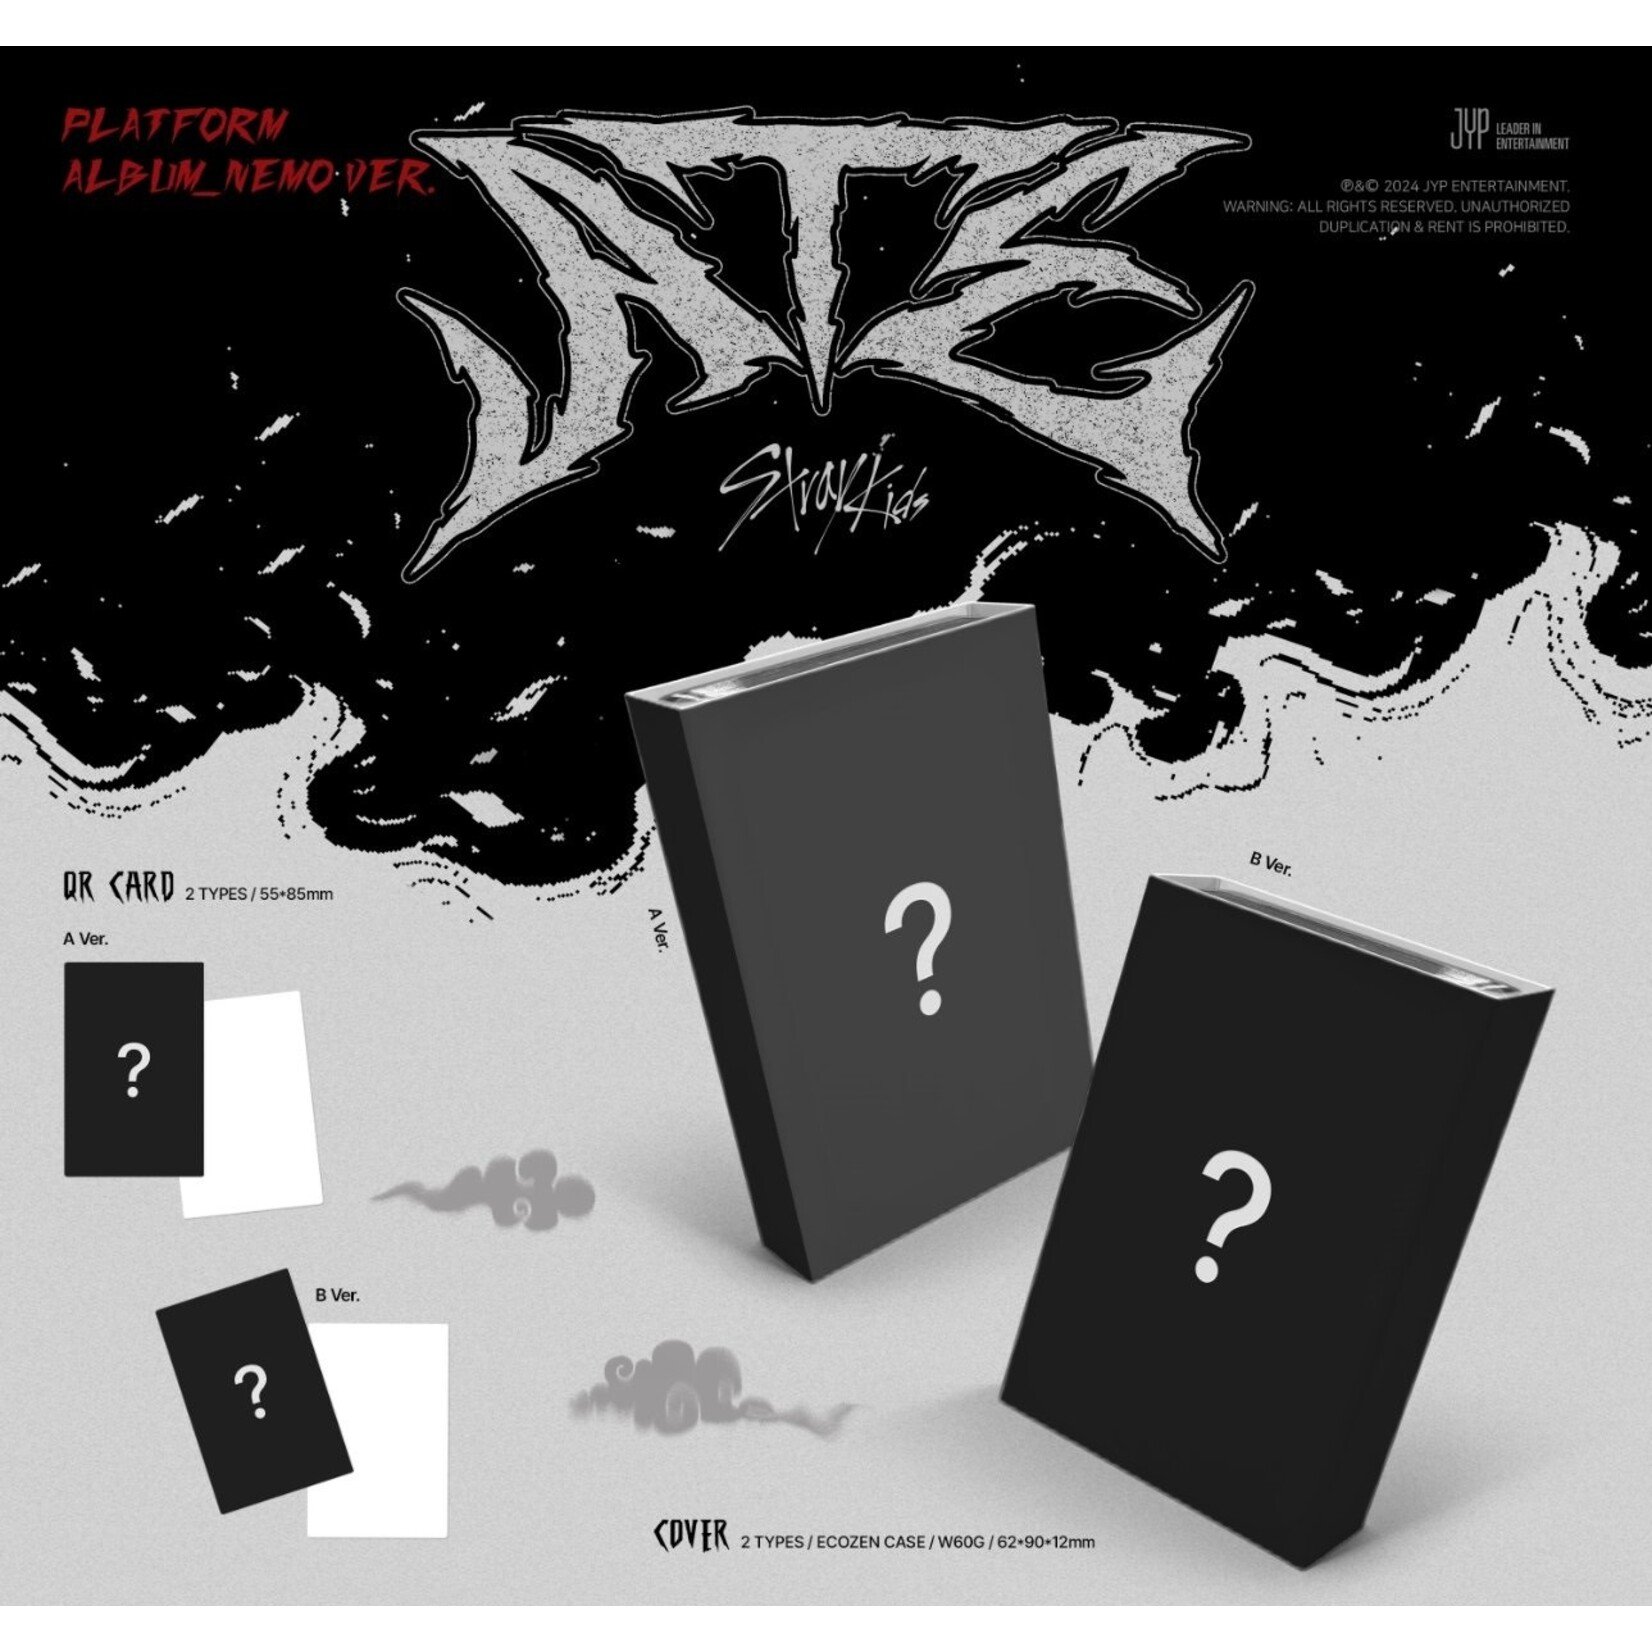 Stray Kids Stray Kids - 9th Mini Album [ATE] [PLATFORM ALBUM_NEMO VER.] + Random Photocard (JYP SHOP)